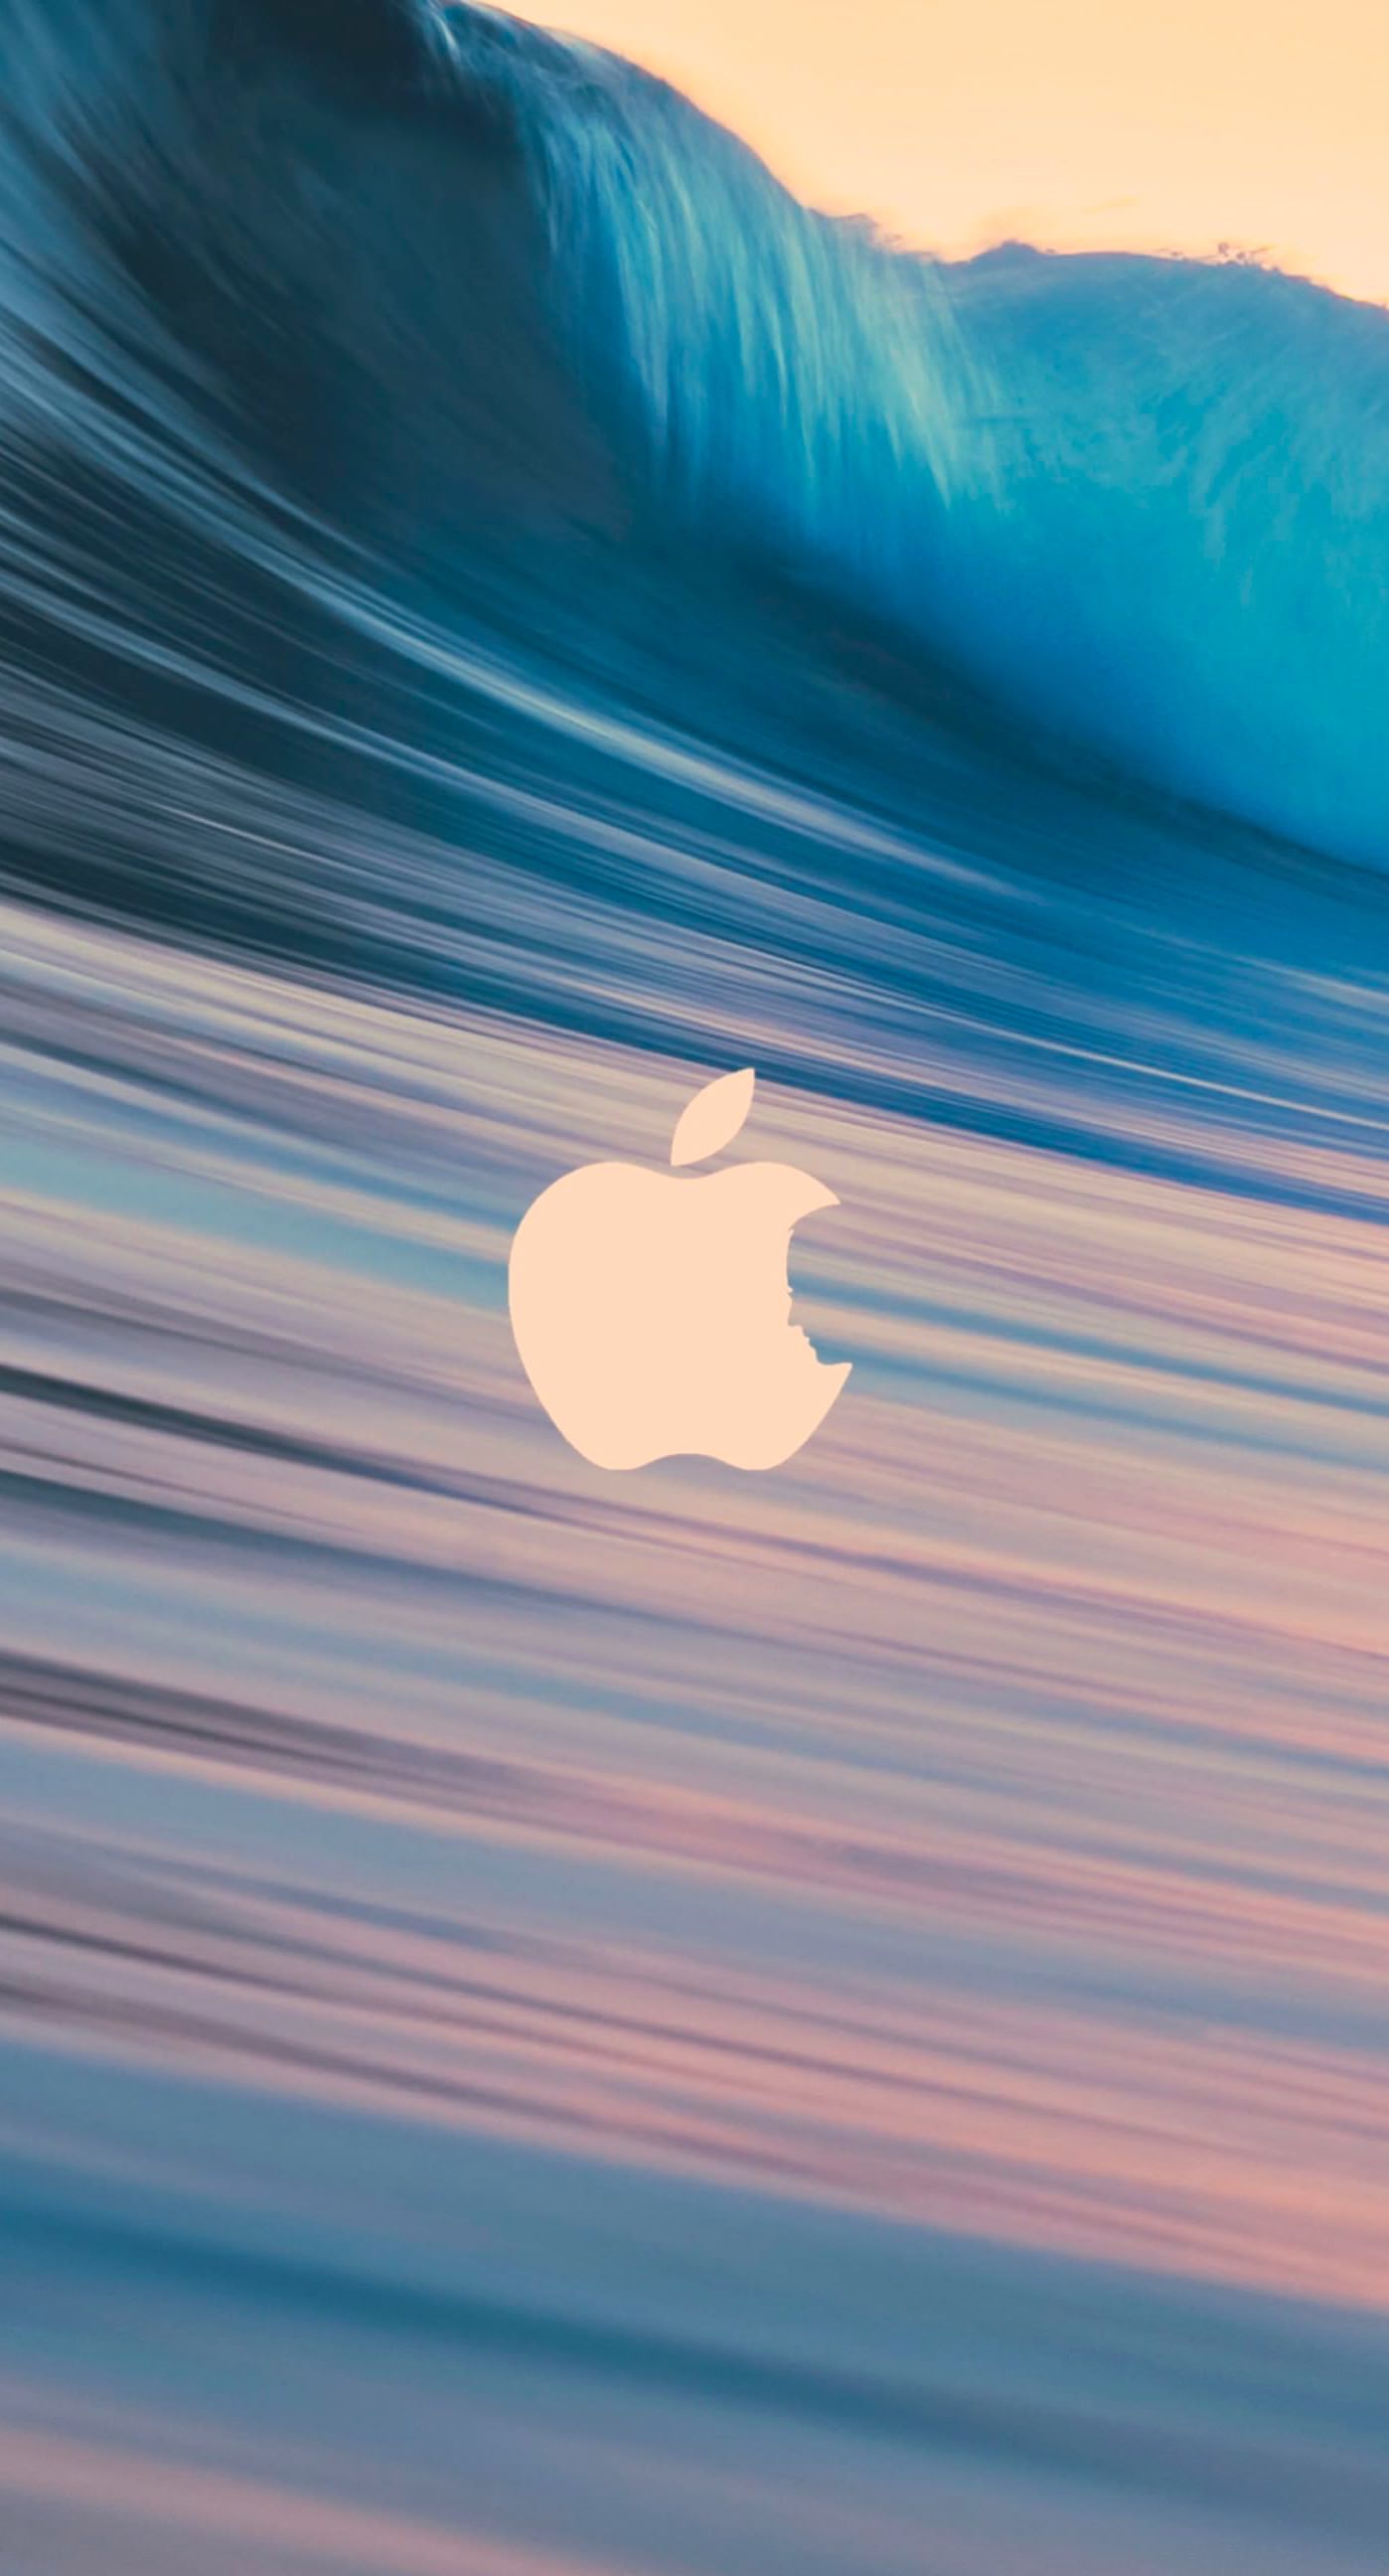 Apple wave | wallpaper.sc iPhone8Plus